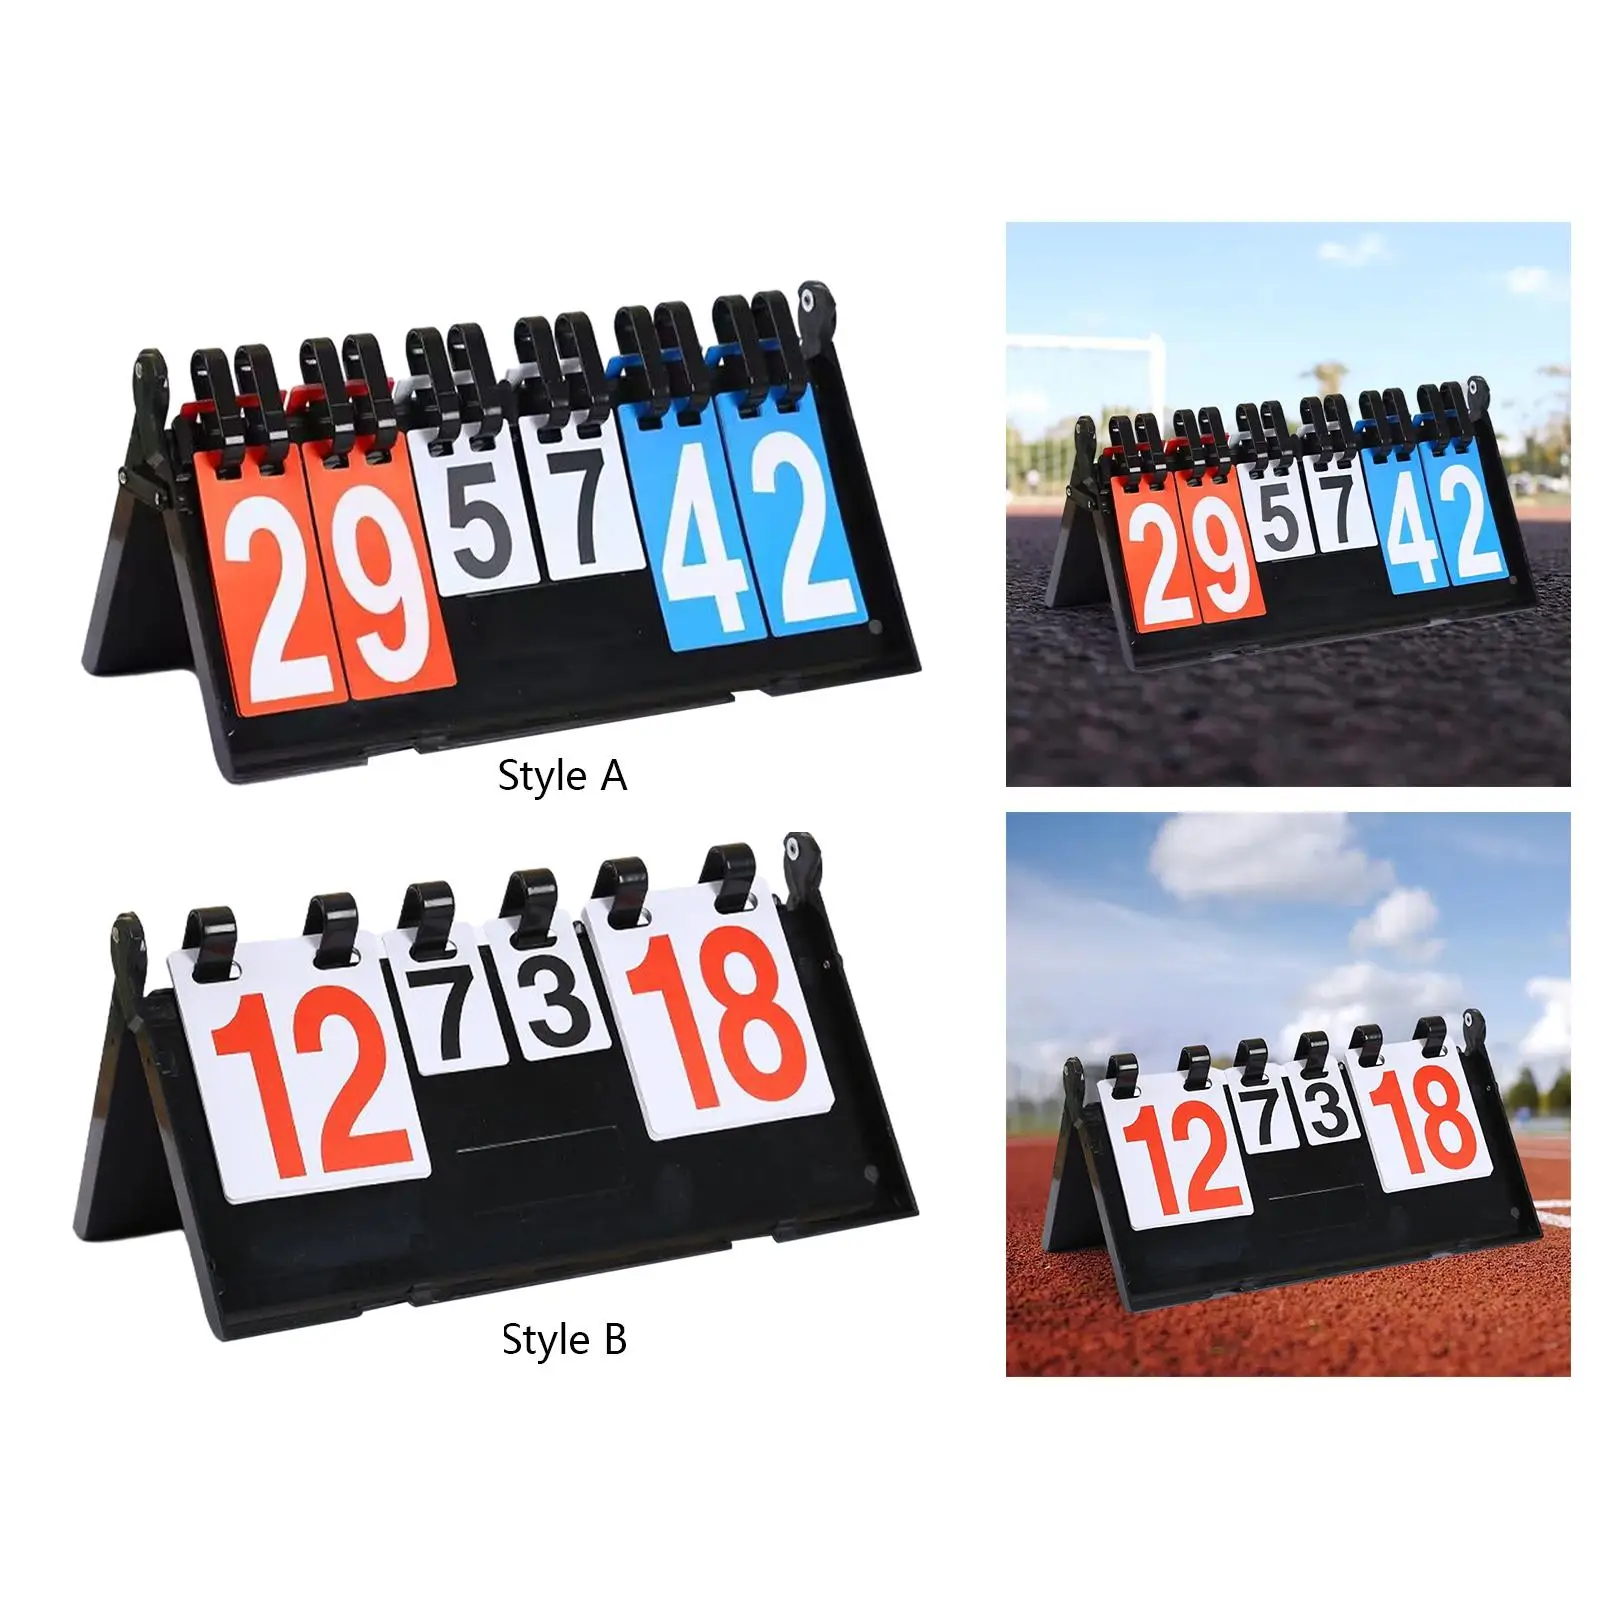 Score Board Portable Scoreboard Flipper for Team Games Baseball Competition